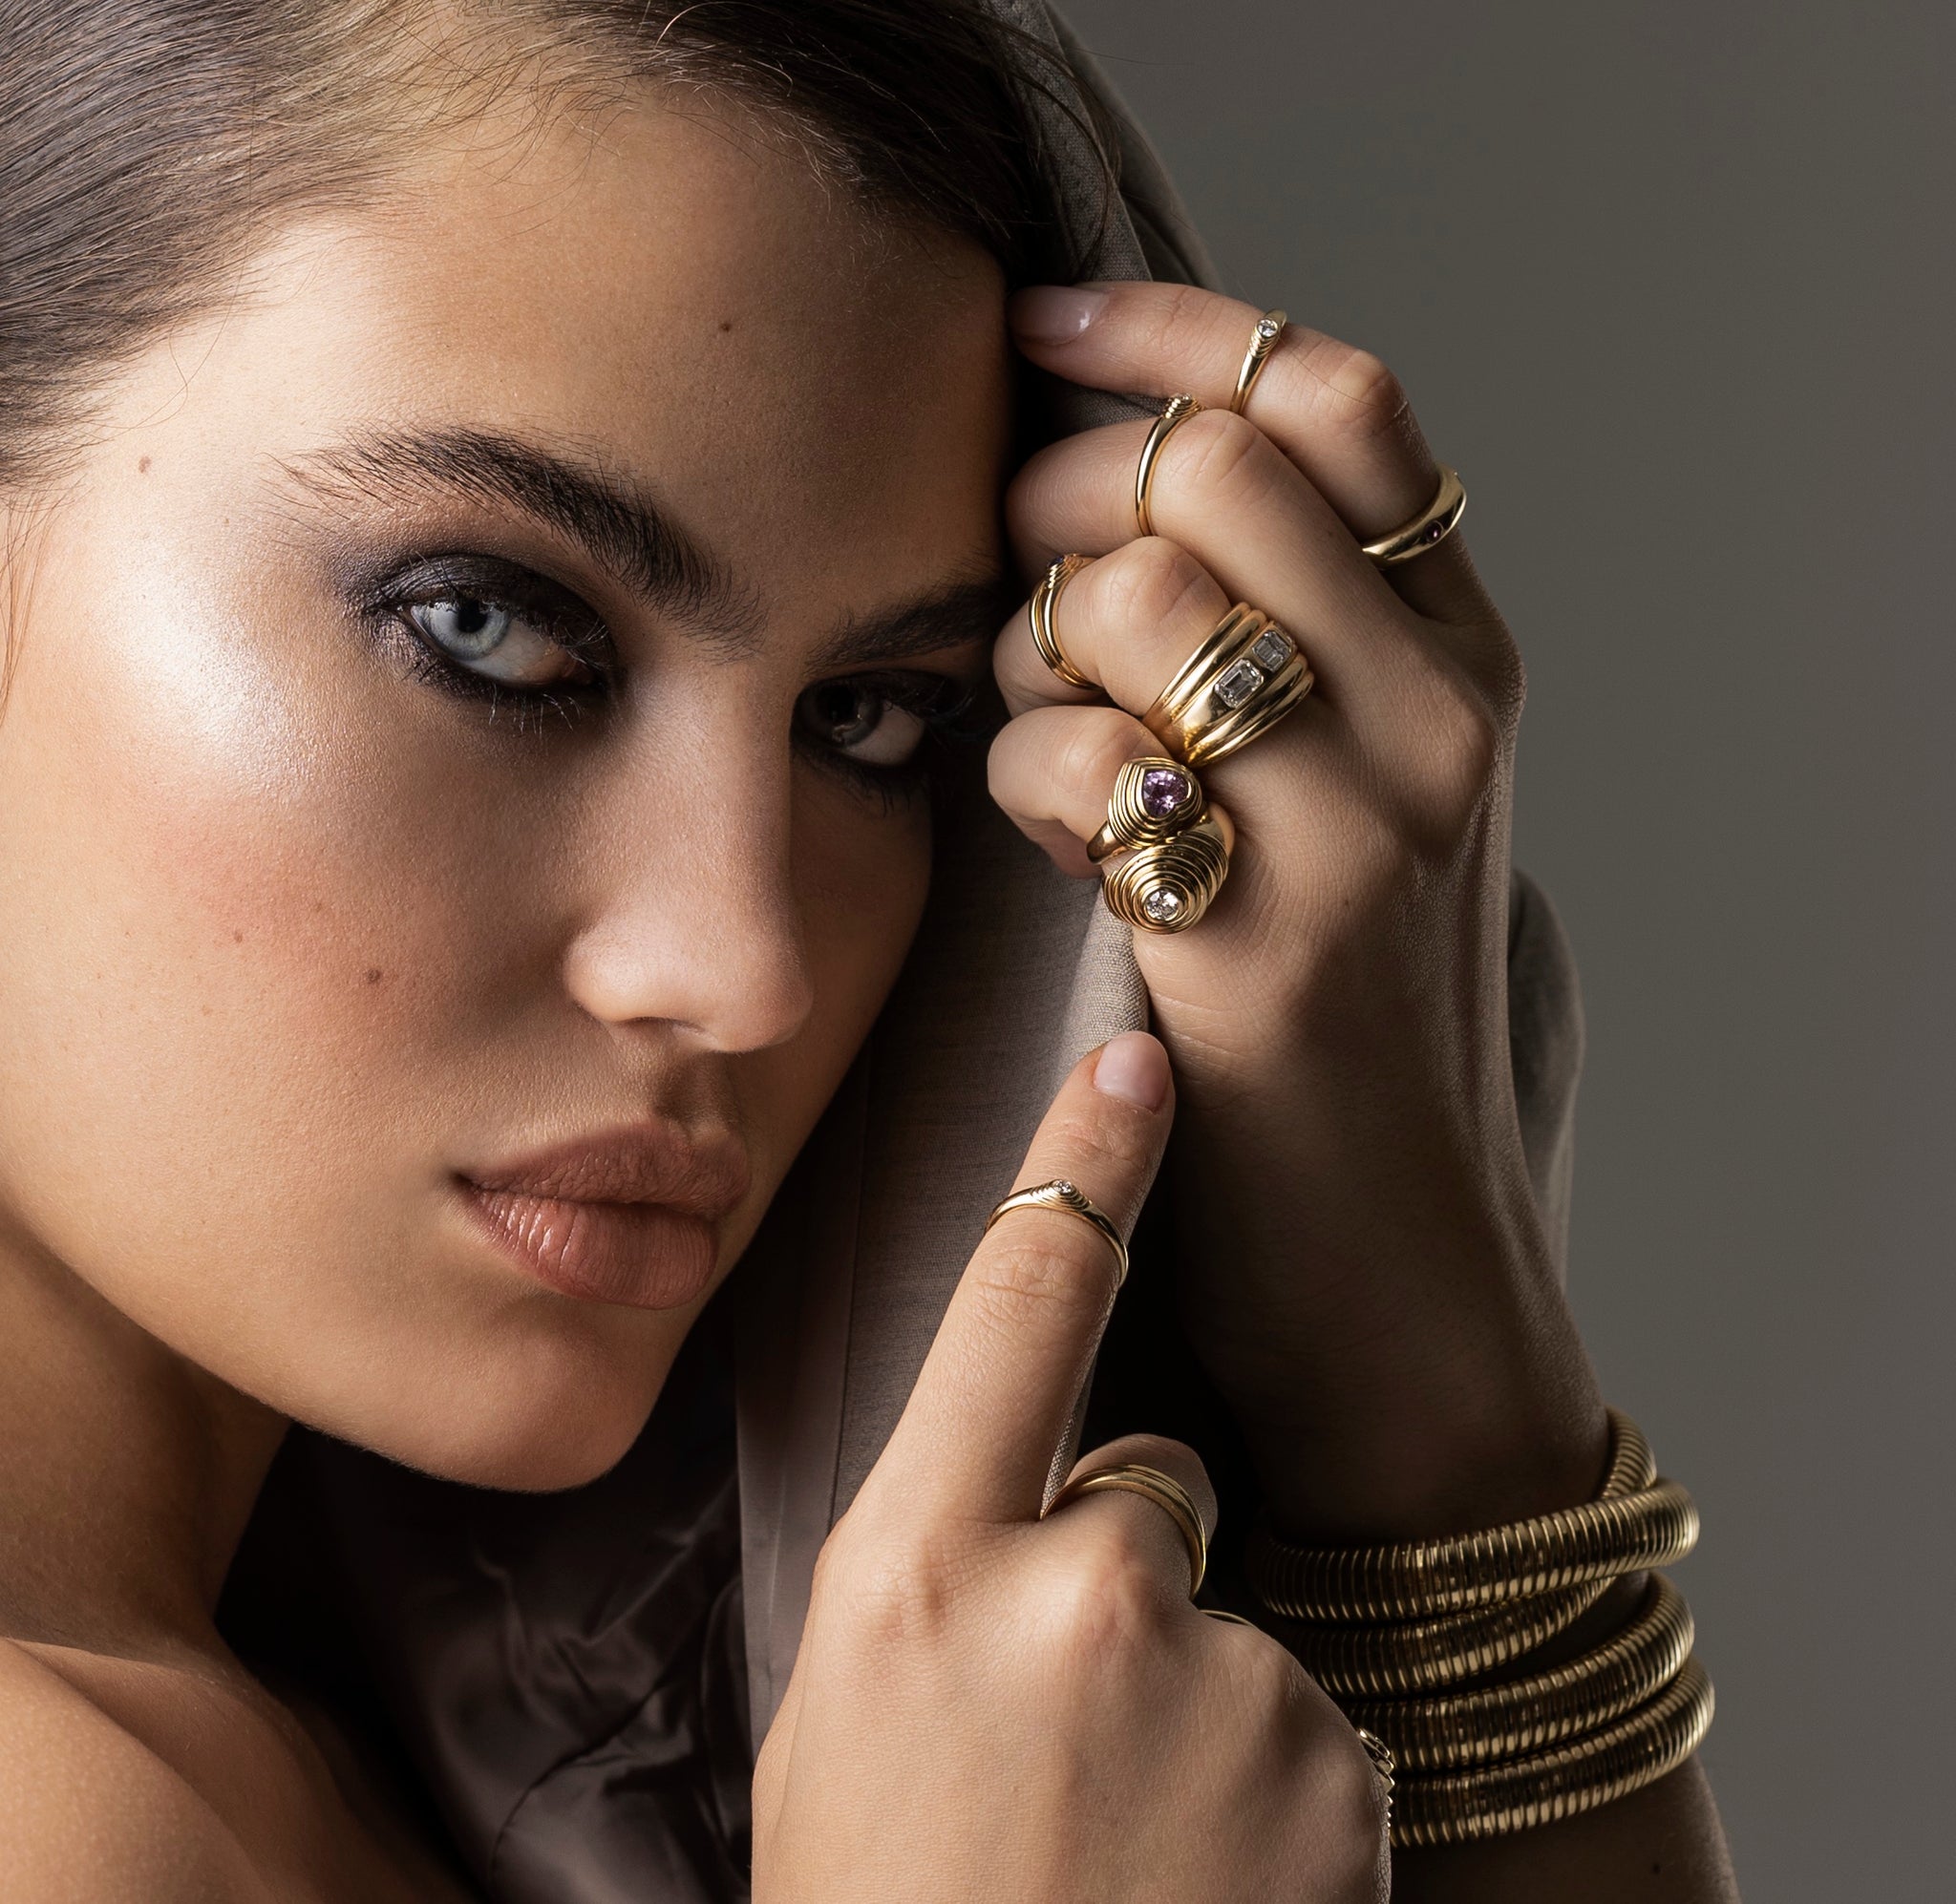 Model with Deborah Pagani Jewelry